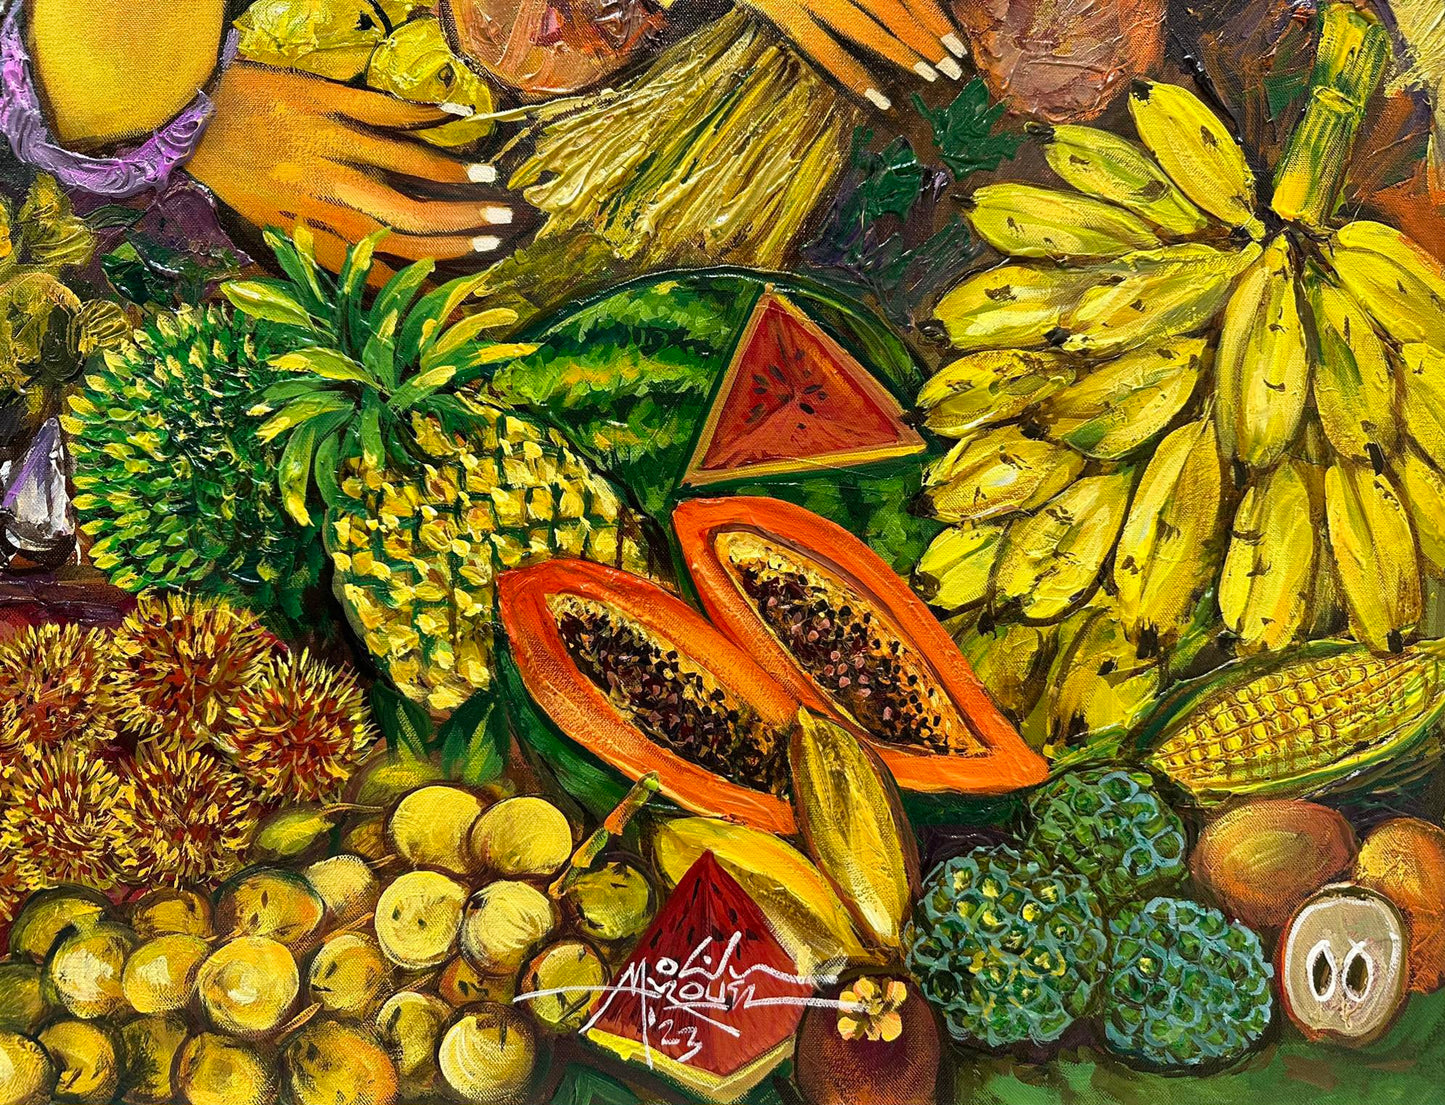 Singko Marias Bountiful Fruits, Vegetable and Fish